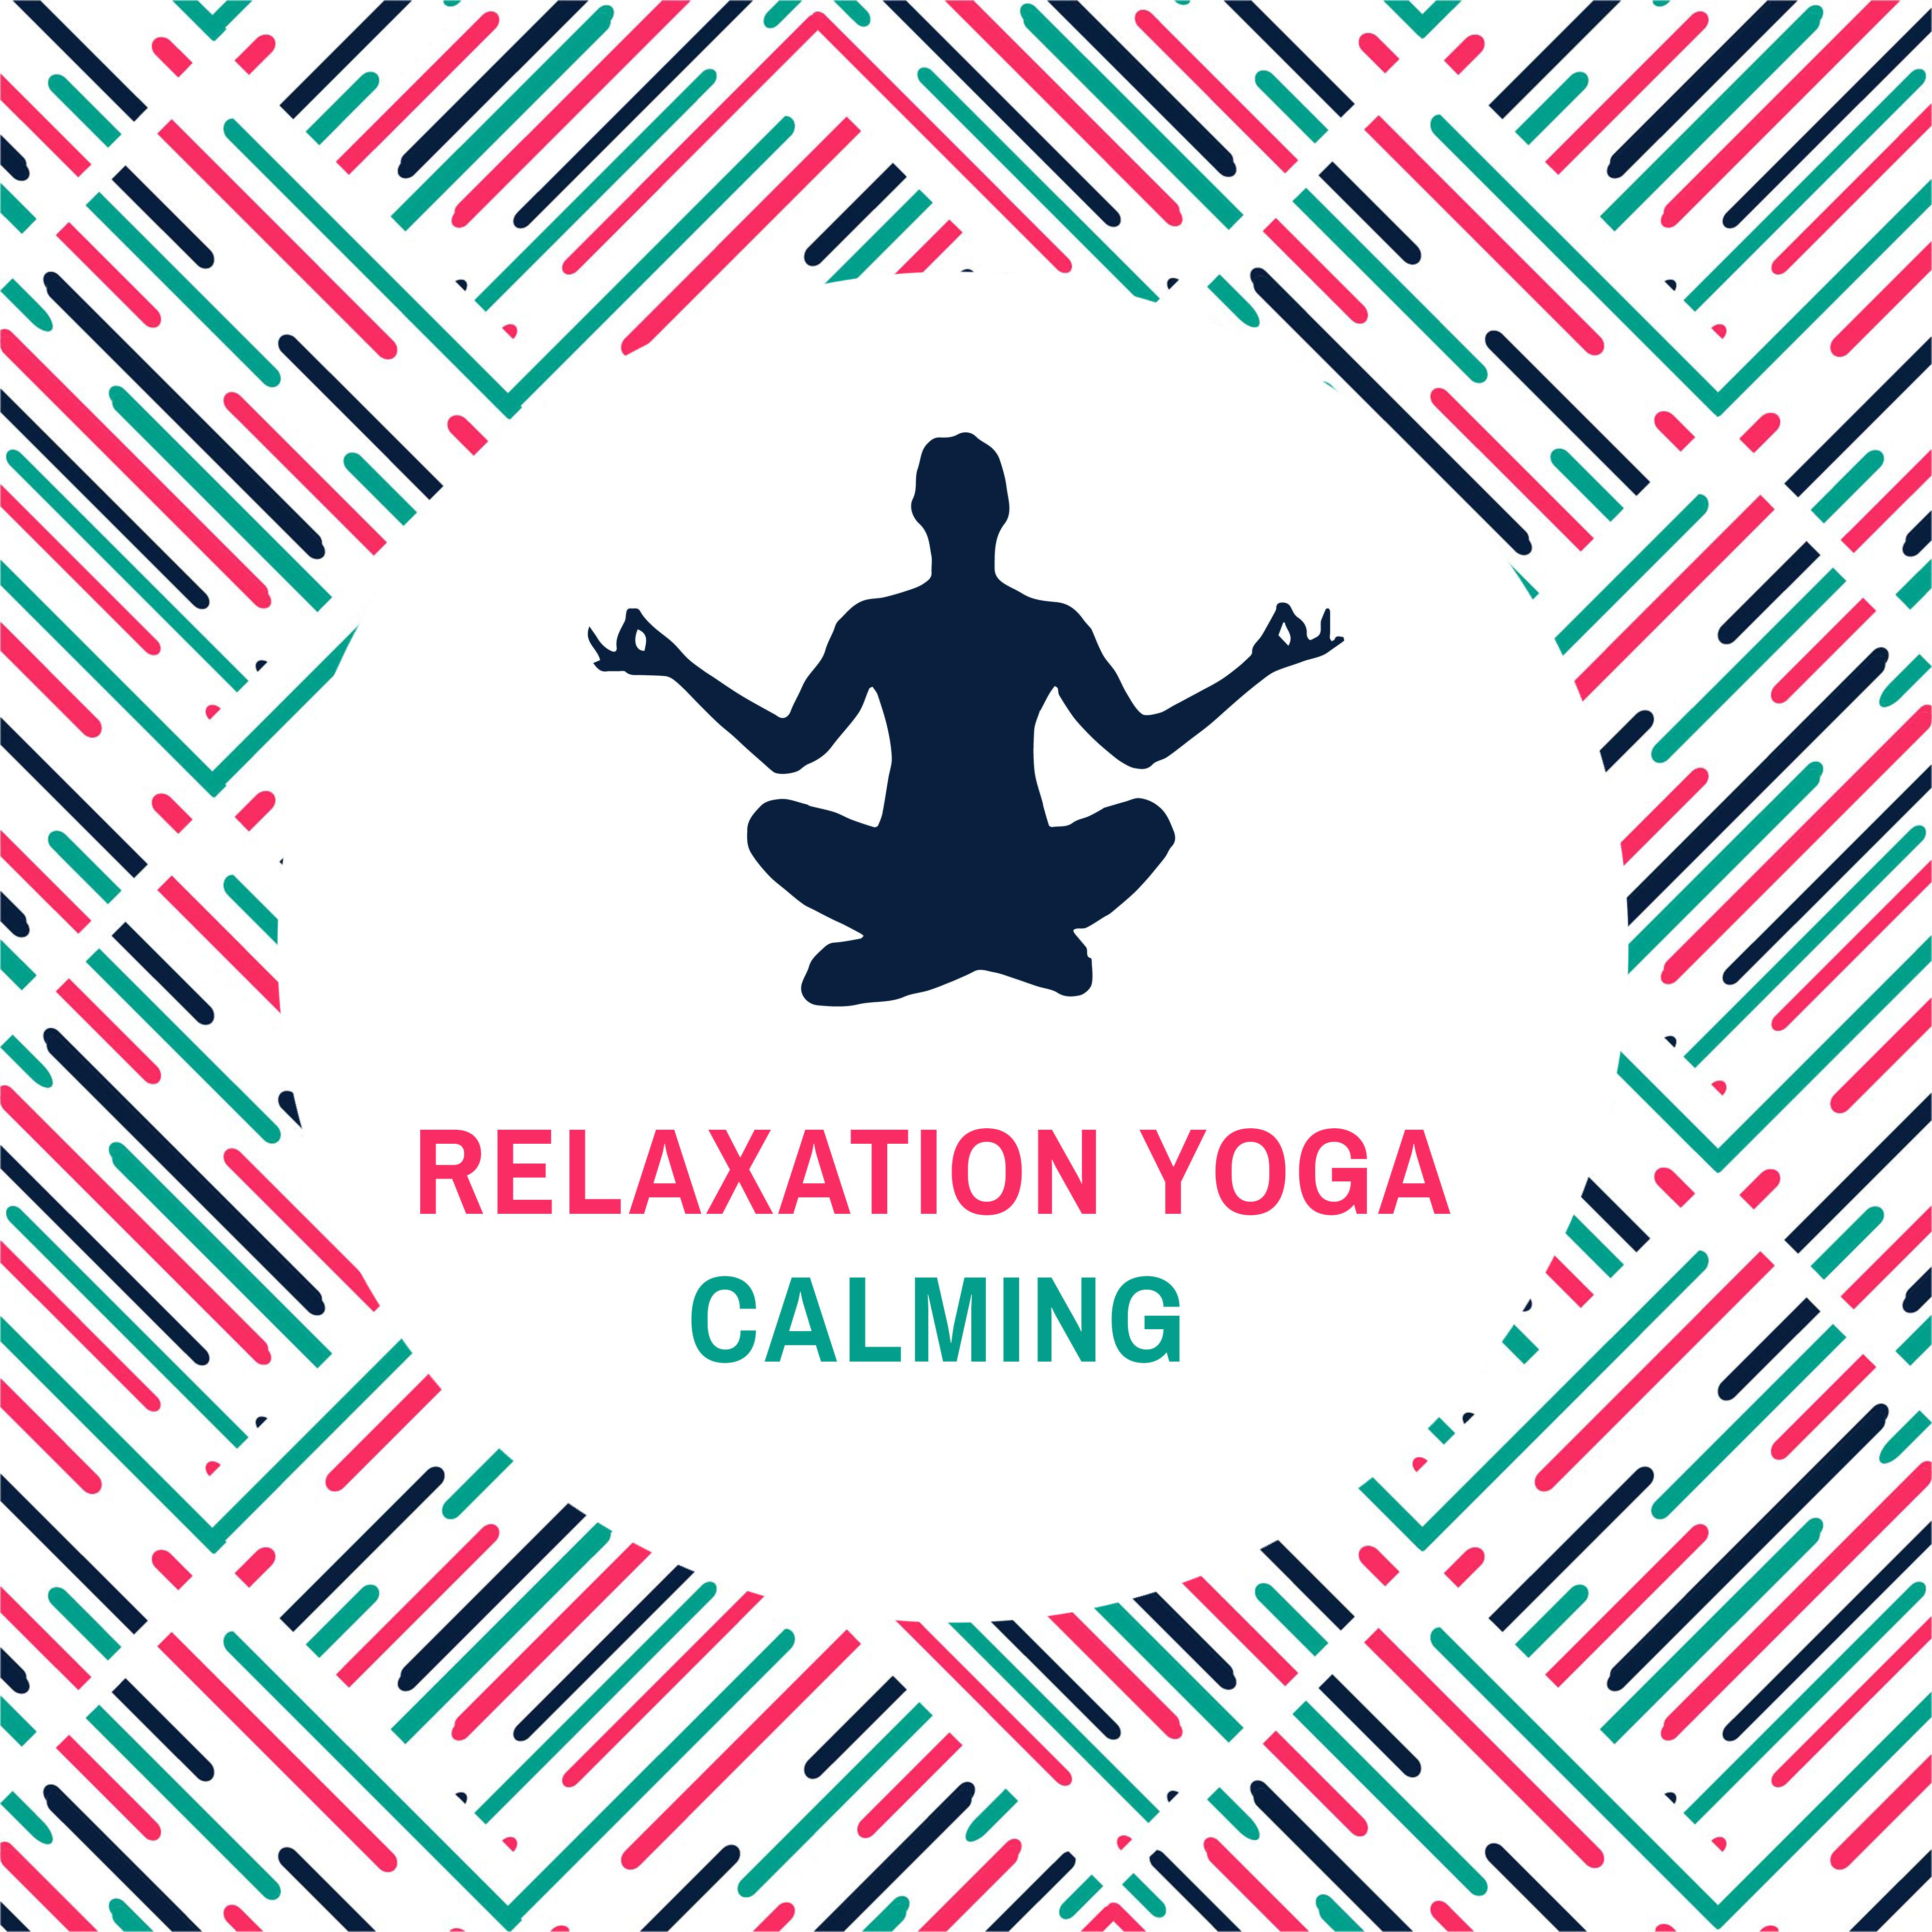 Relaxation Yoga Calming